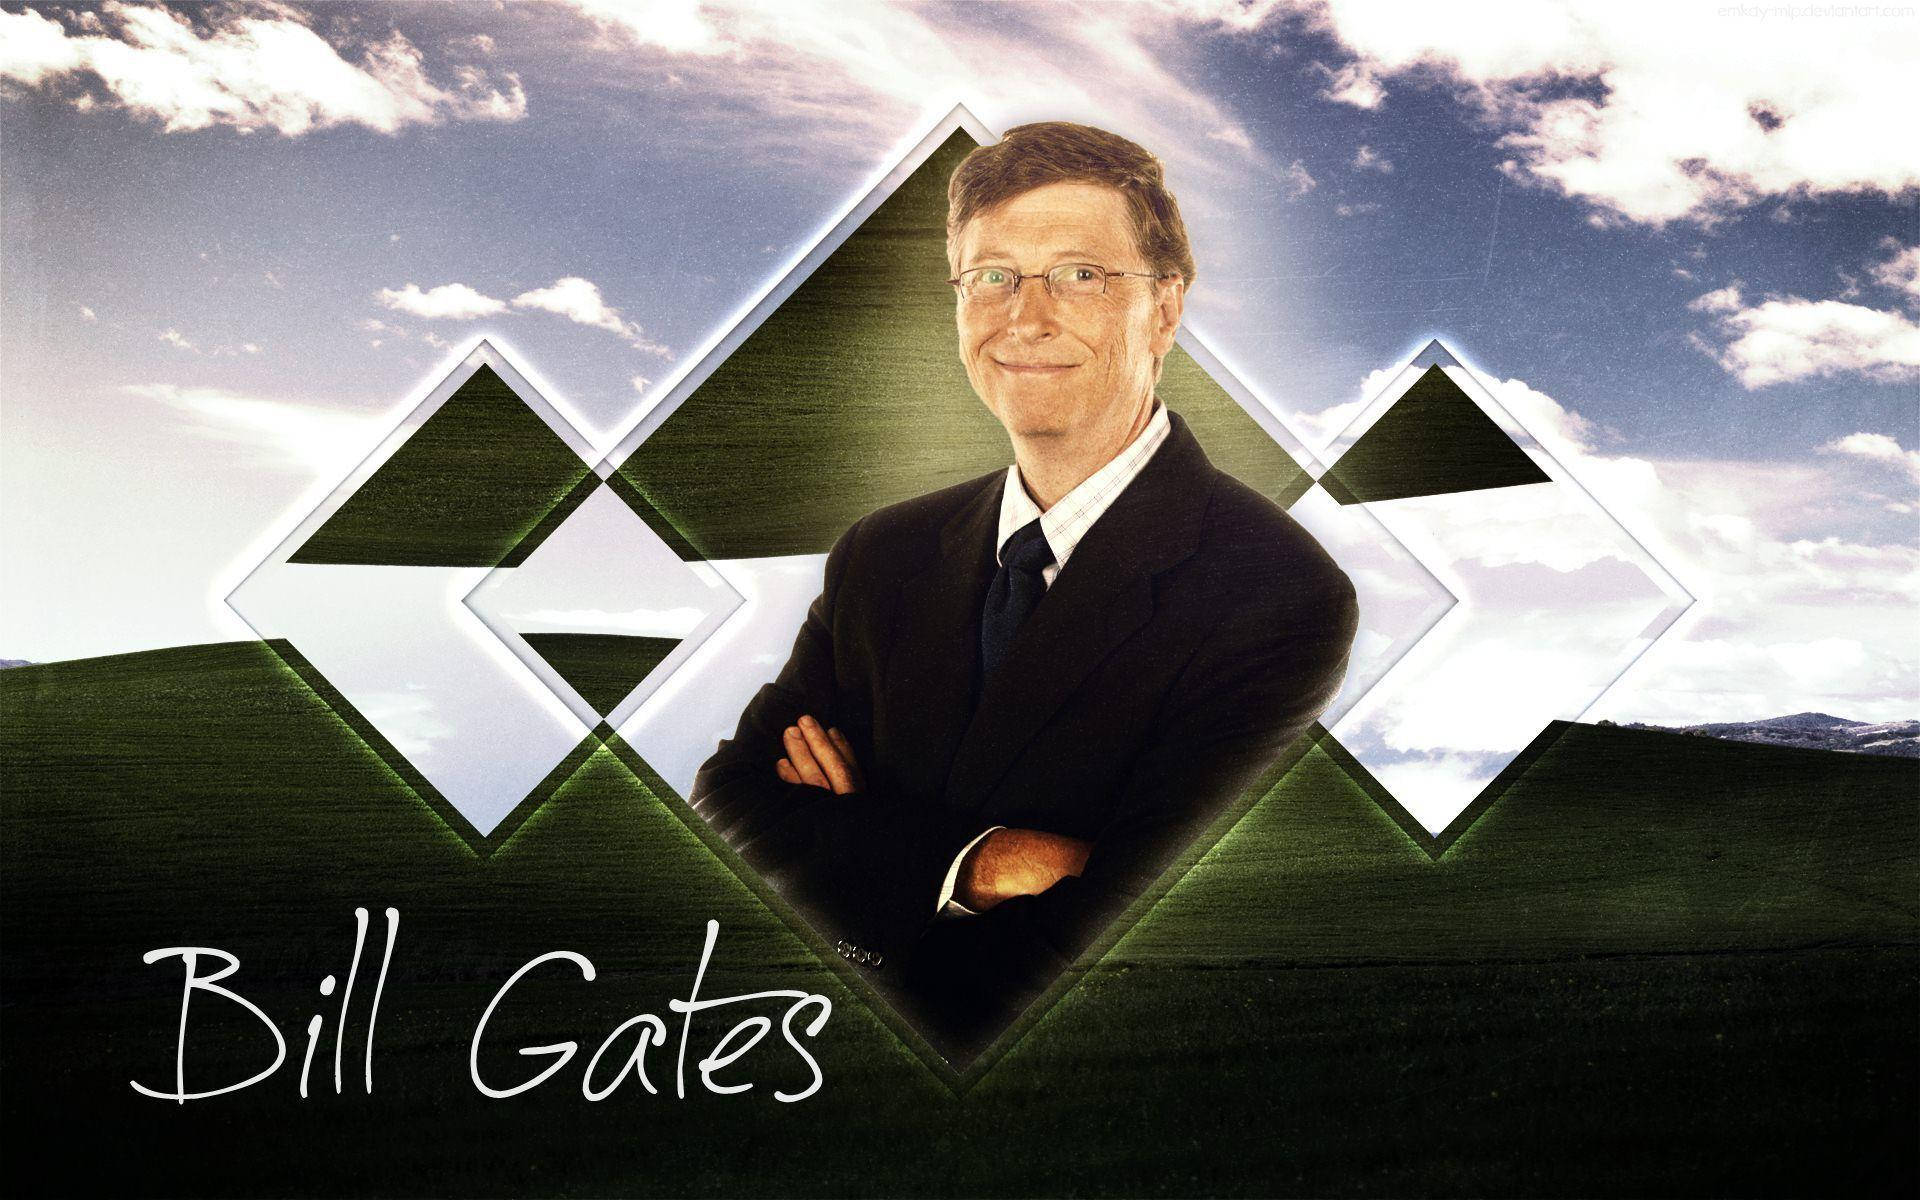 Bill Gates Green Poster Wallpaper